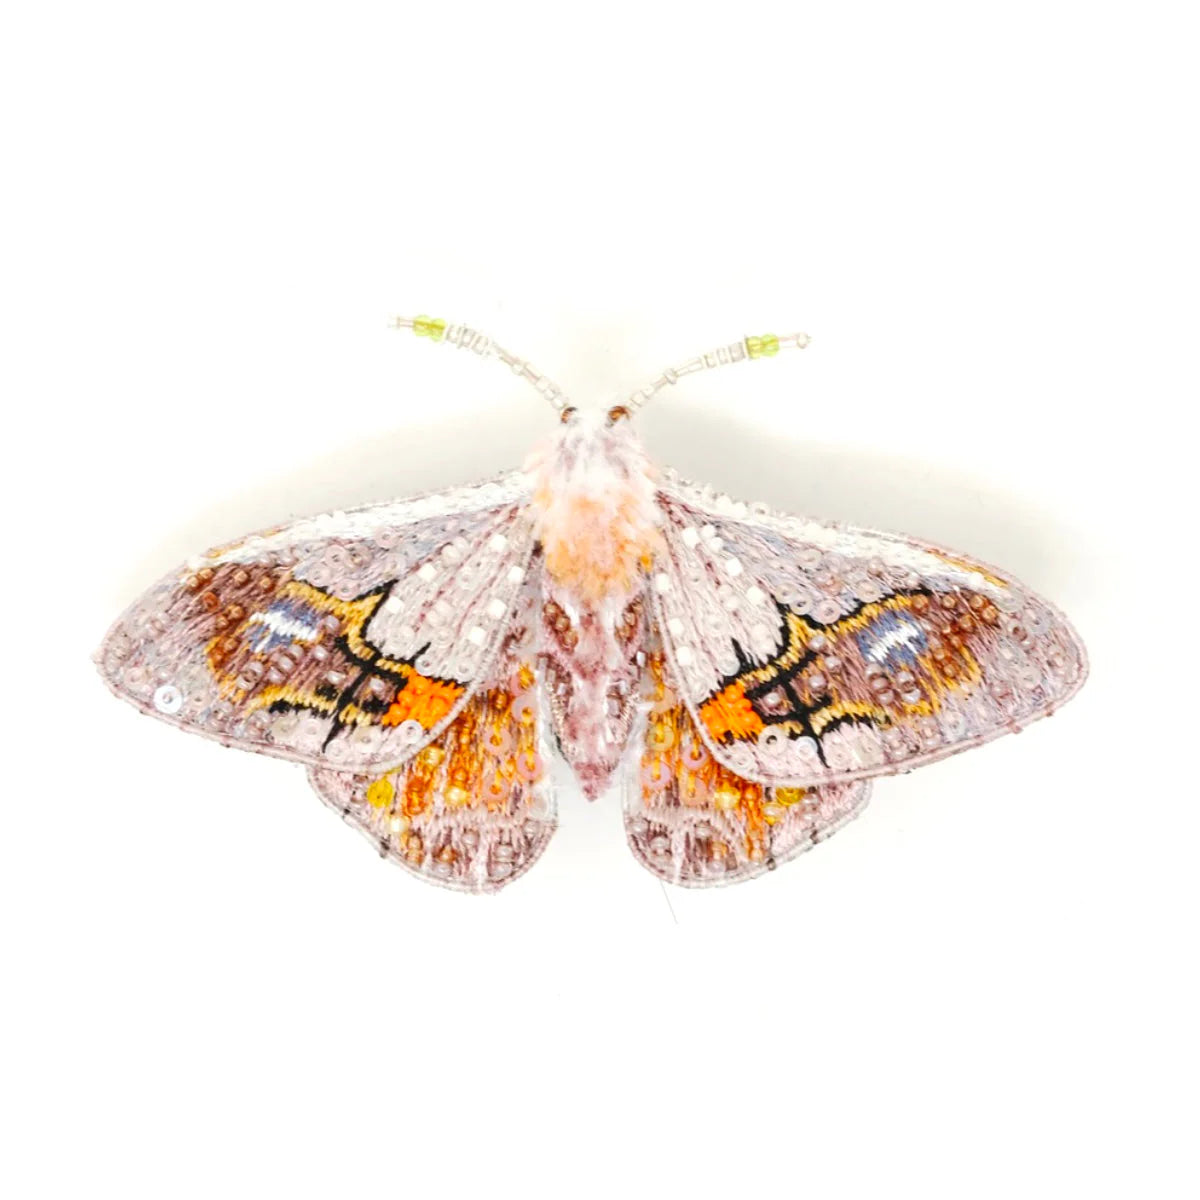 Drepanid Moth Brooch Pin